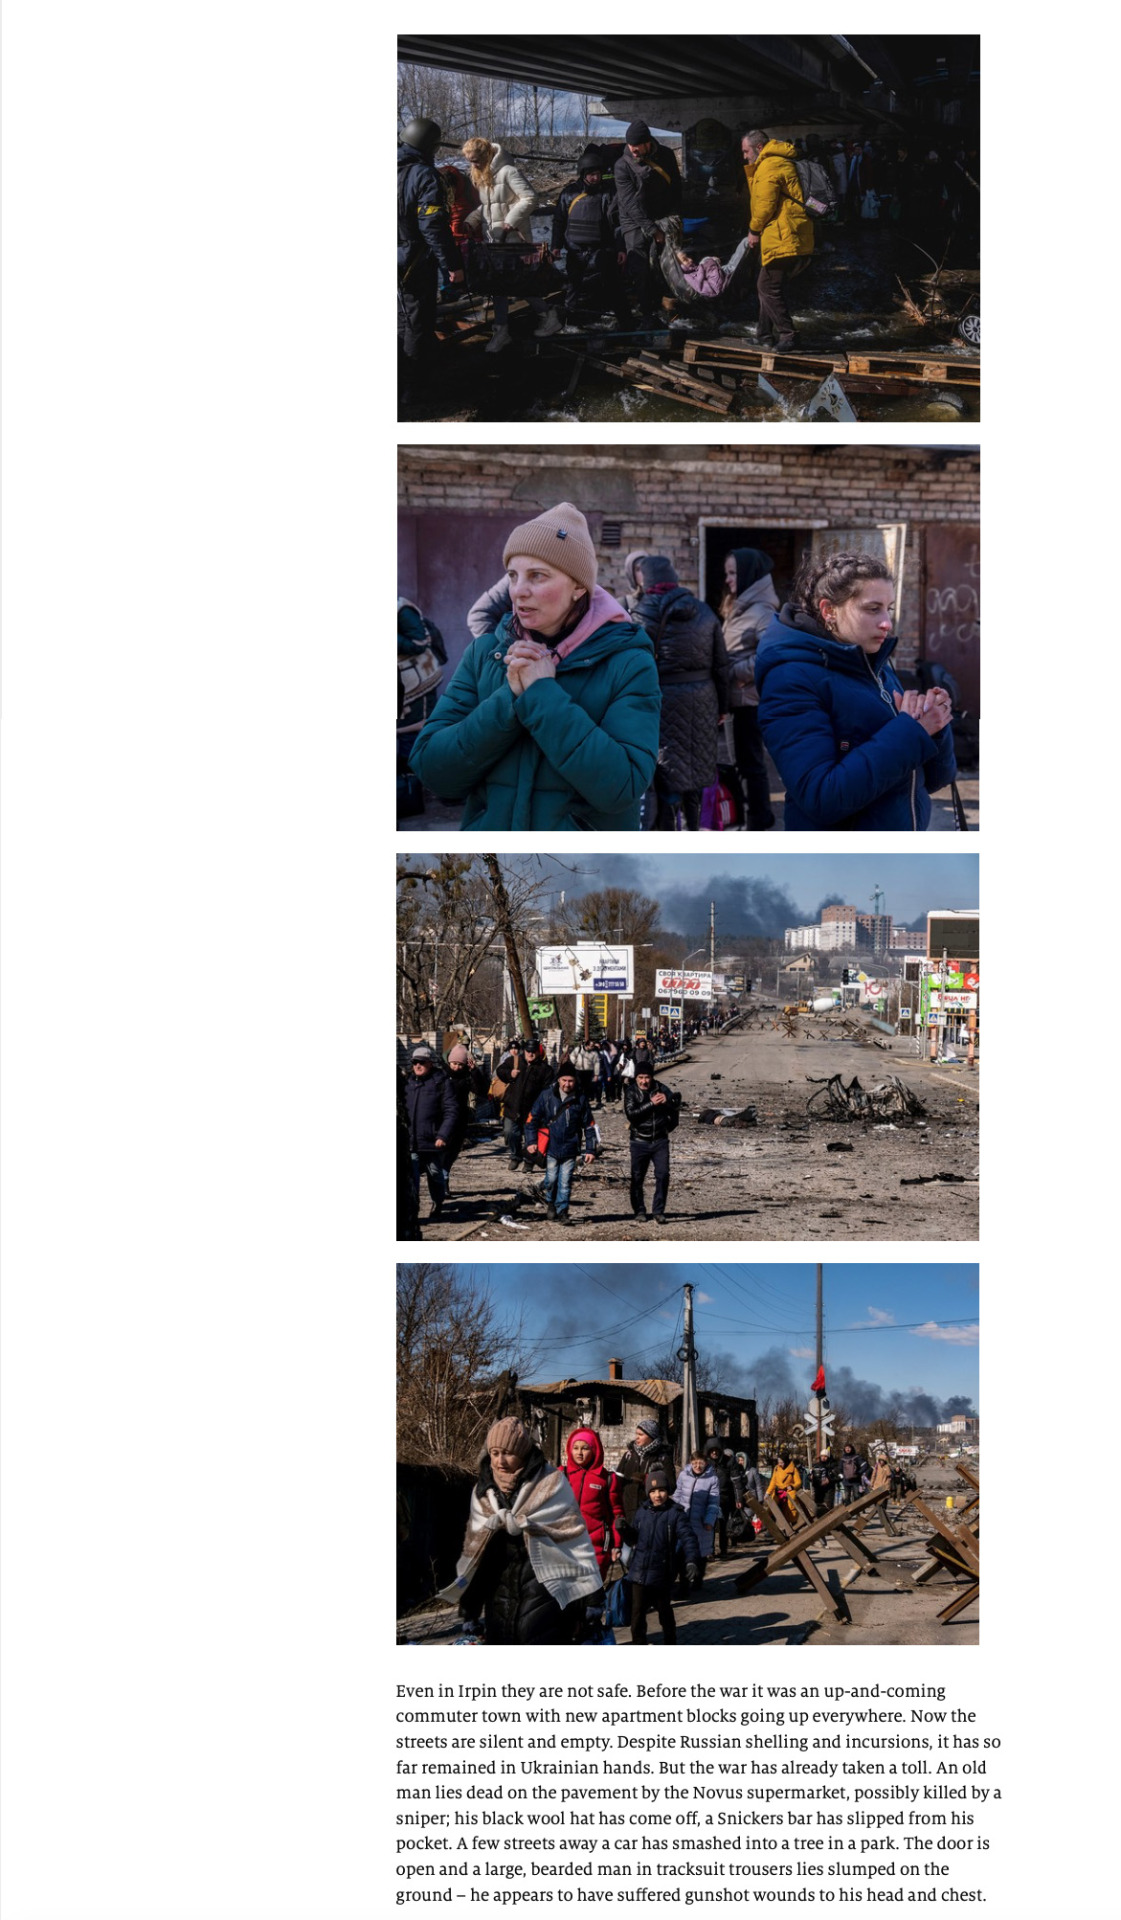 Photos by Ron Haviv / VII of Ukrainians fleeing the embattled town of Irpin, Ukraine, in The Economist 1843 Magazine, March 11, 2022.